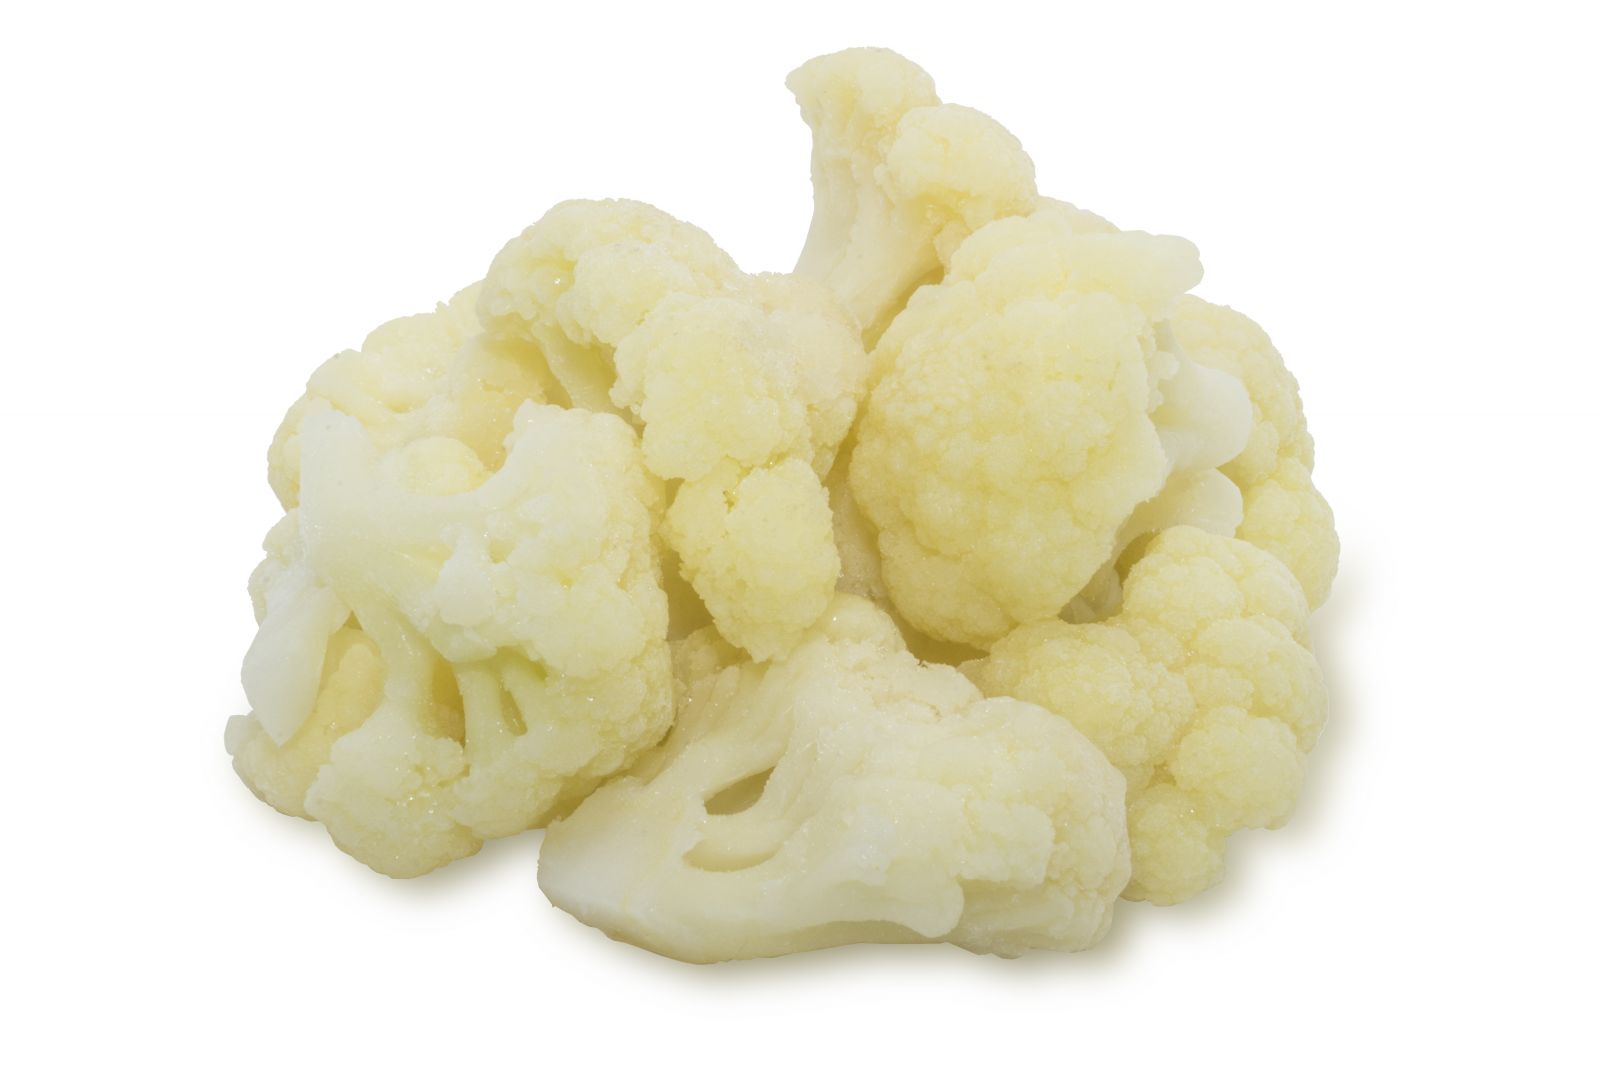 https://www.lavifood.com/en/products/blanching/cauliflower